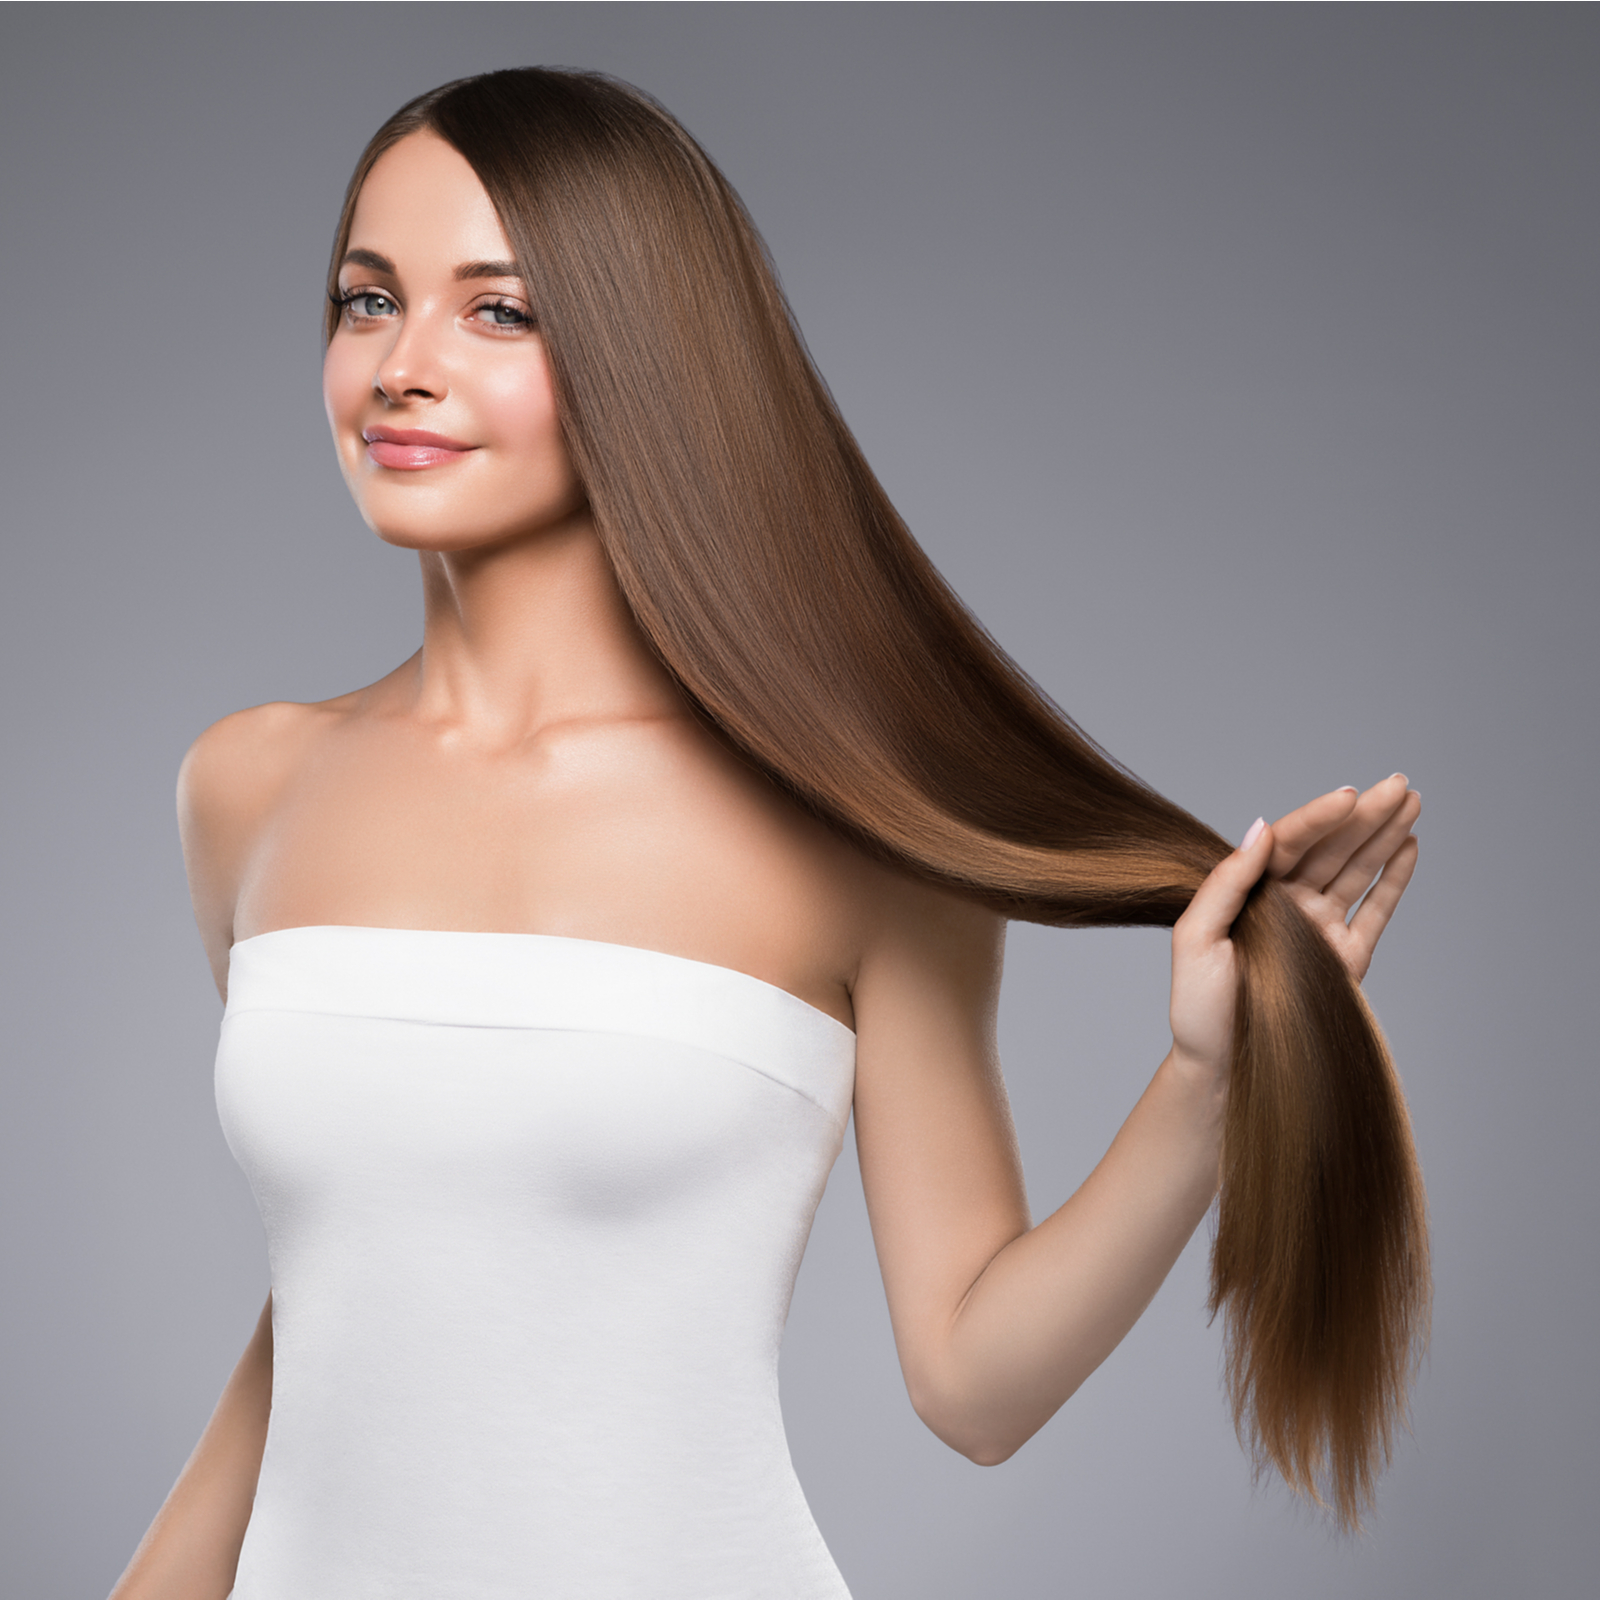 Hair Rebonding Process इन 10 तरक क जरए कर रबनडग टरटमट